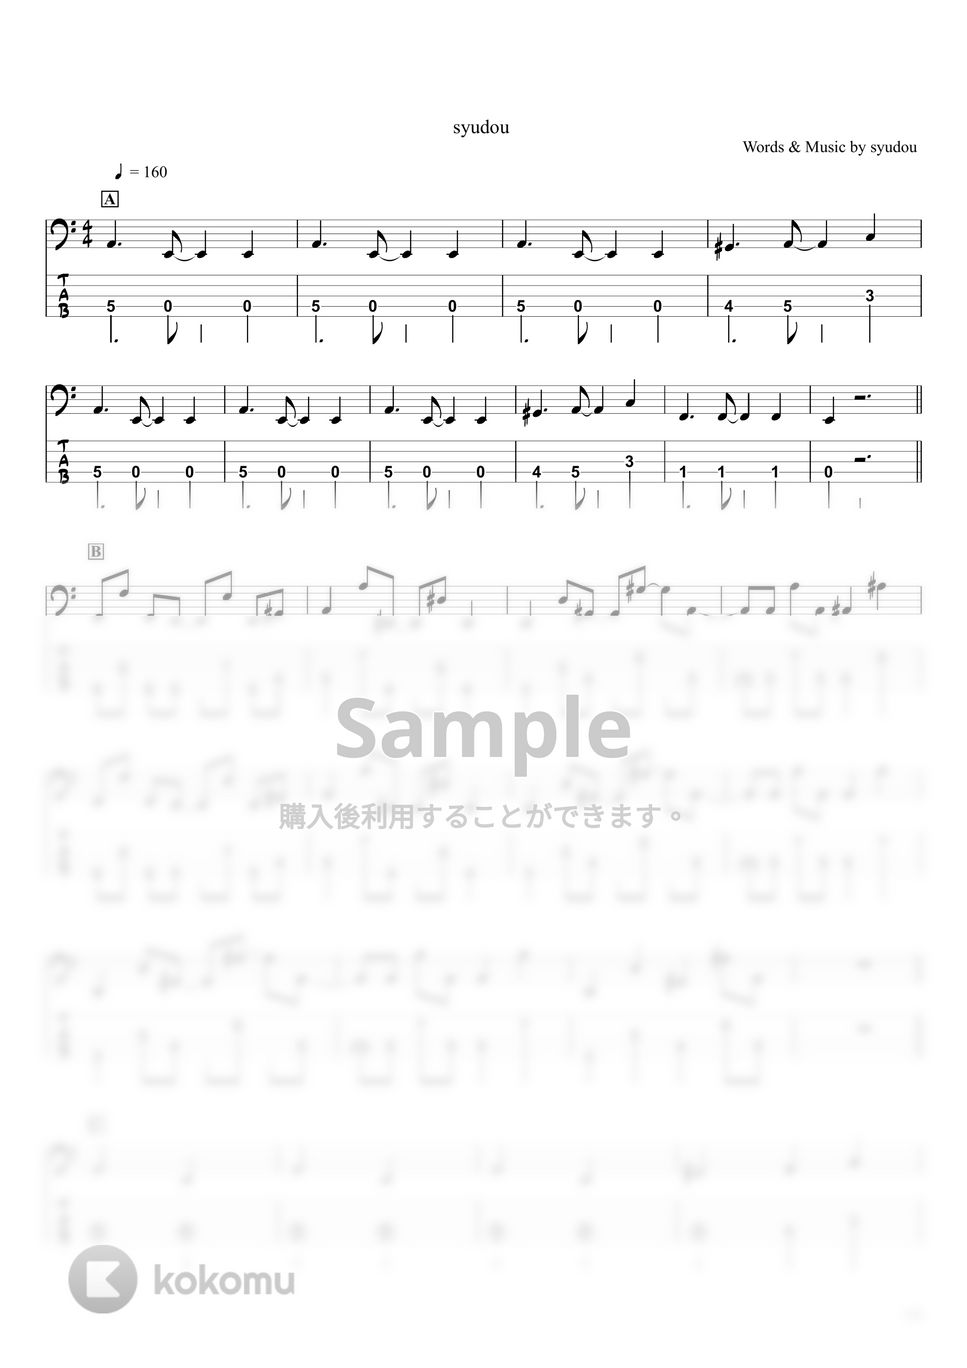 syudou - キュートなカノジョ (ベースTAB譜☆5弦ベース対応) by swbass